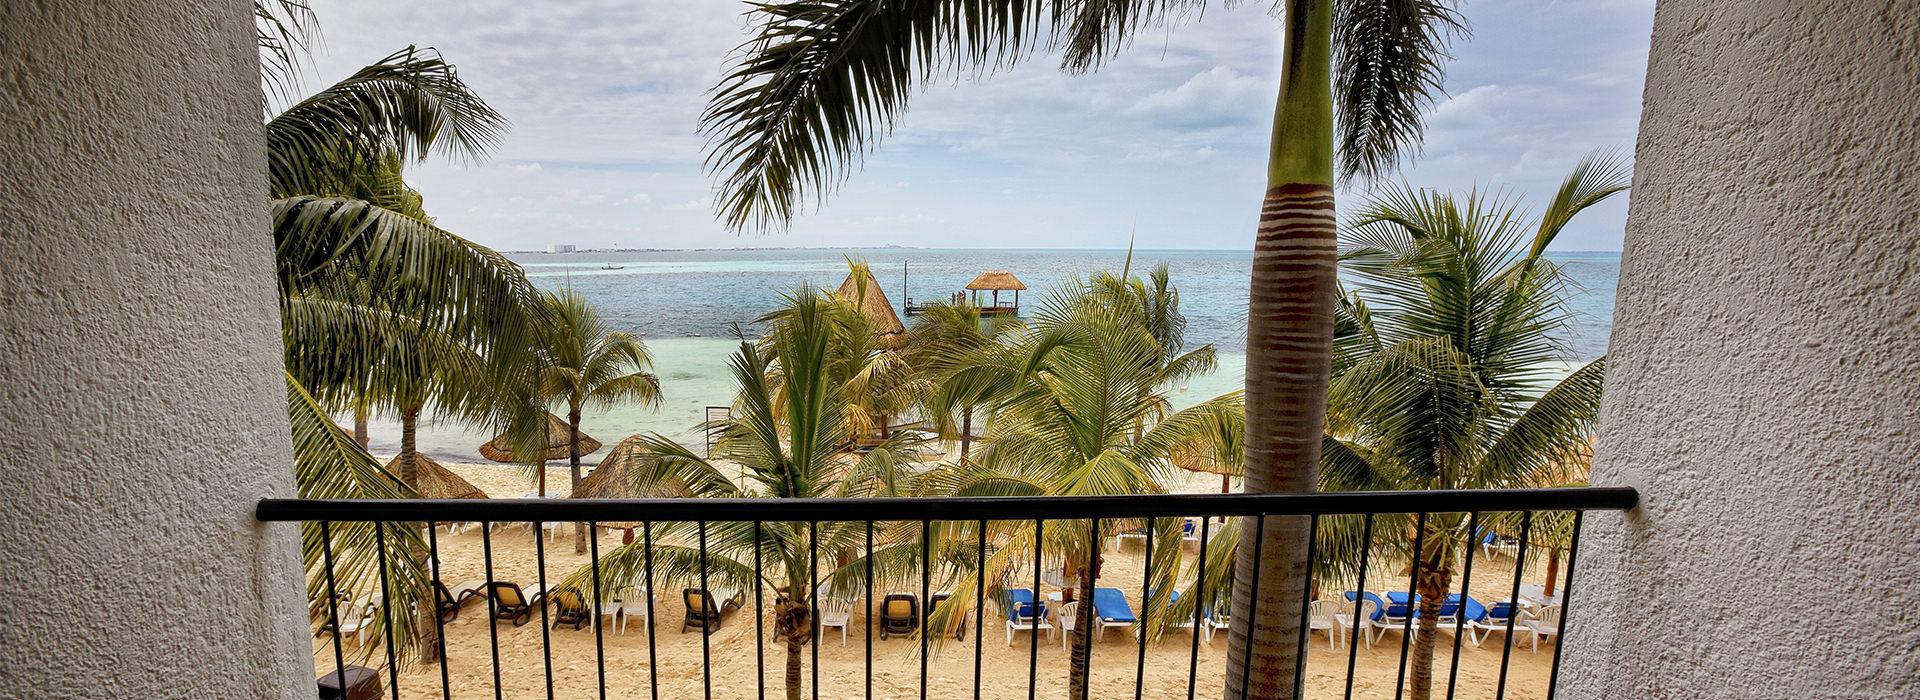 habitación en Cancún con balcón frente al mar